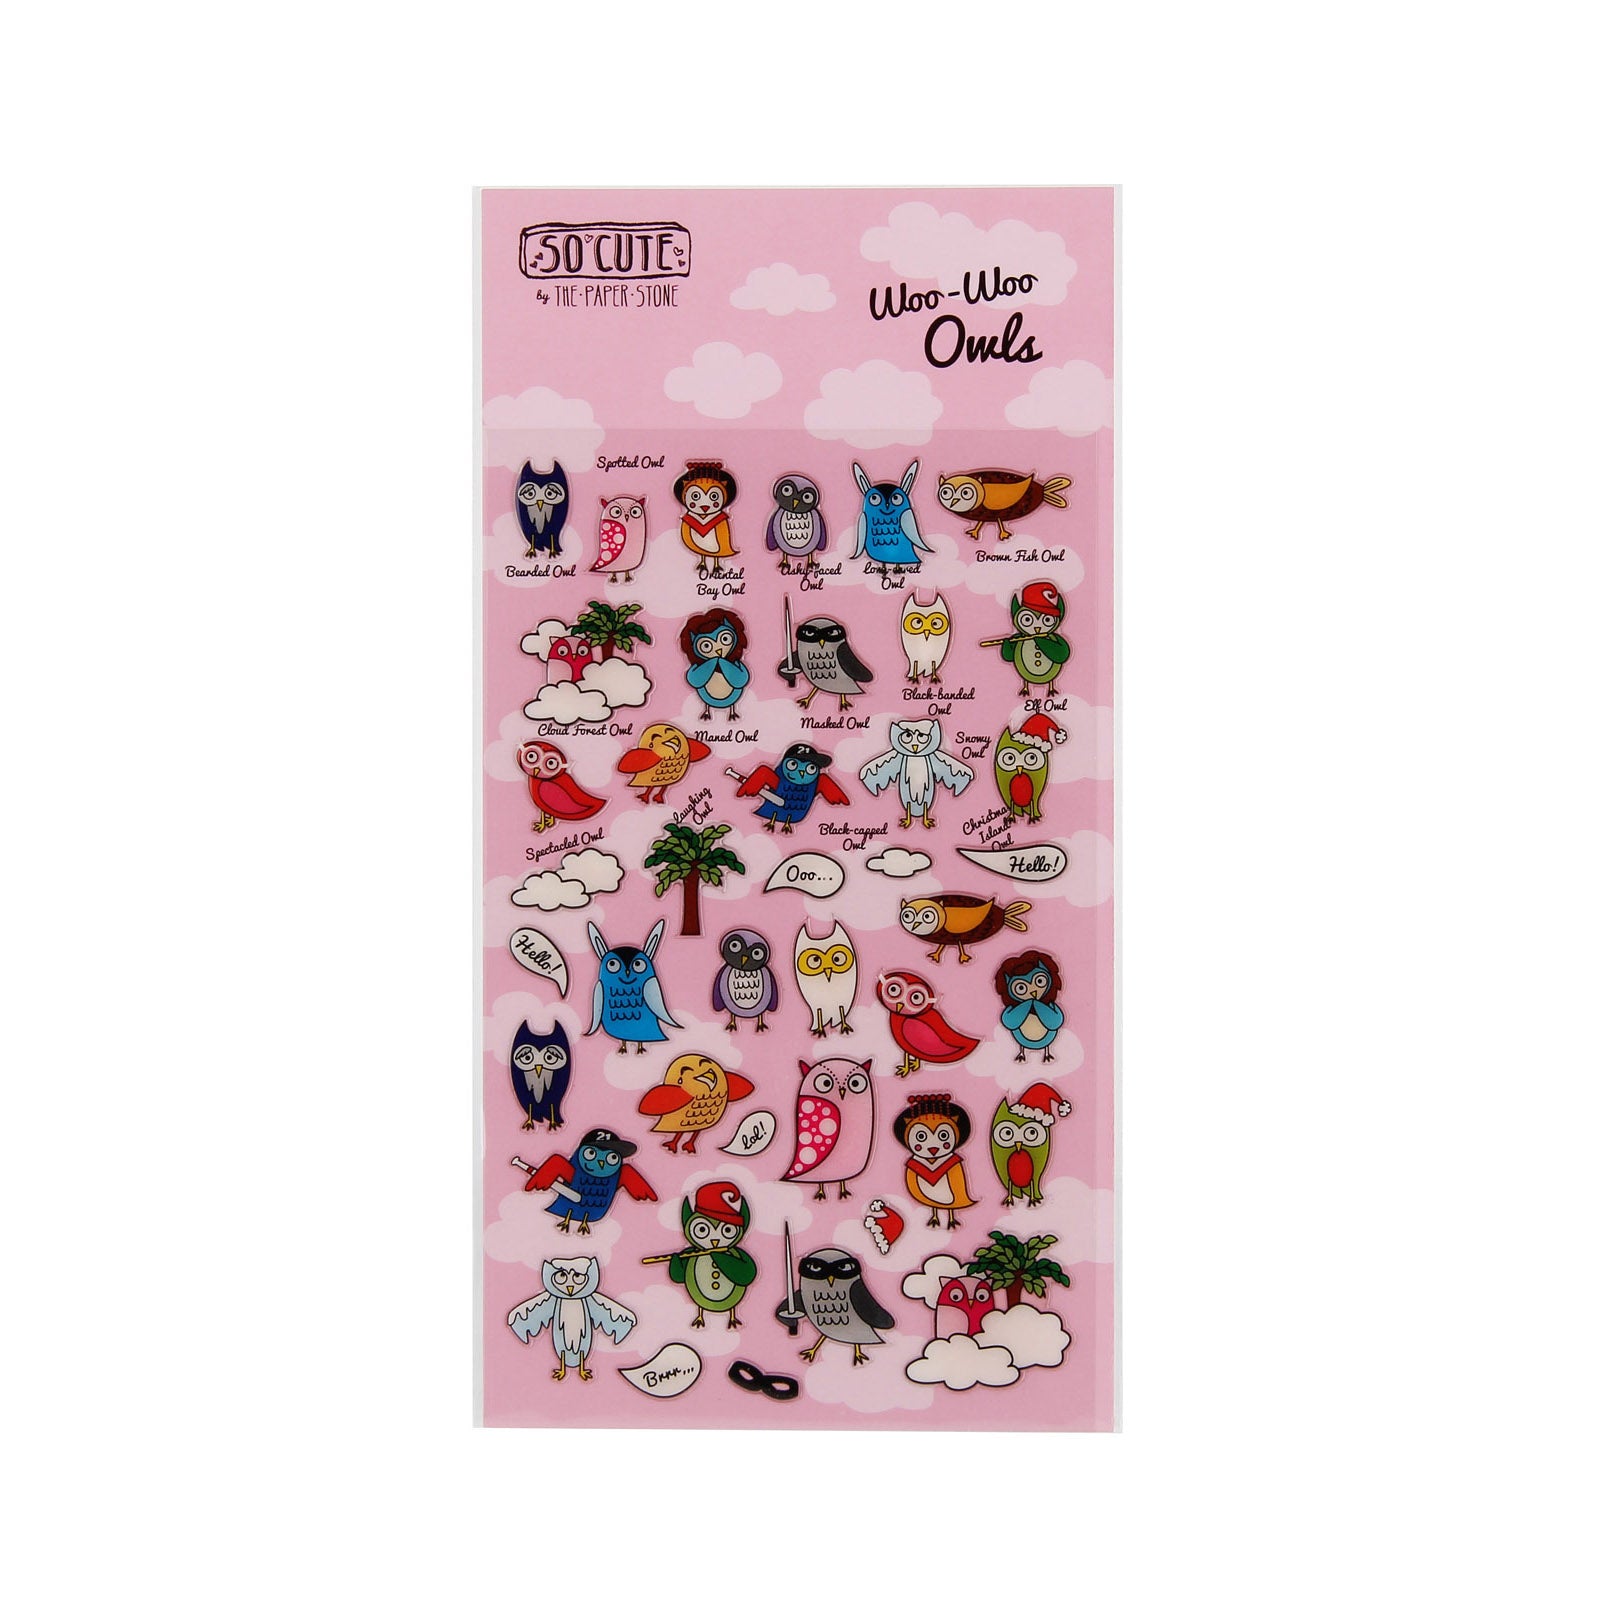 So-Cute Stickers - Woo Woo Owls